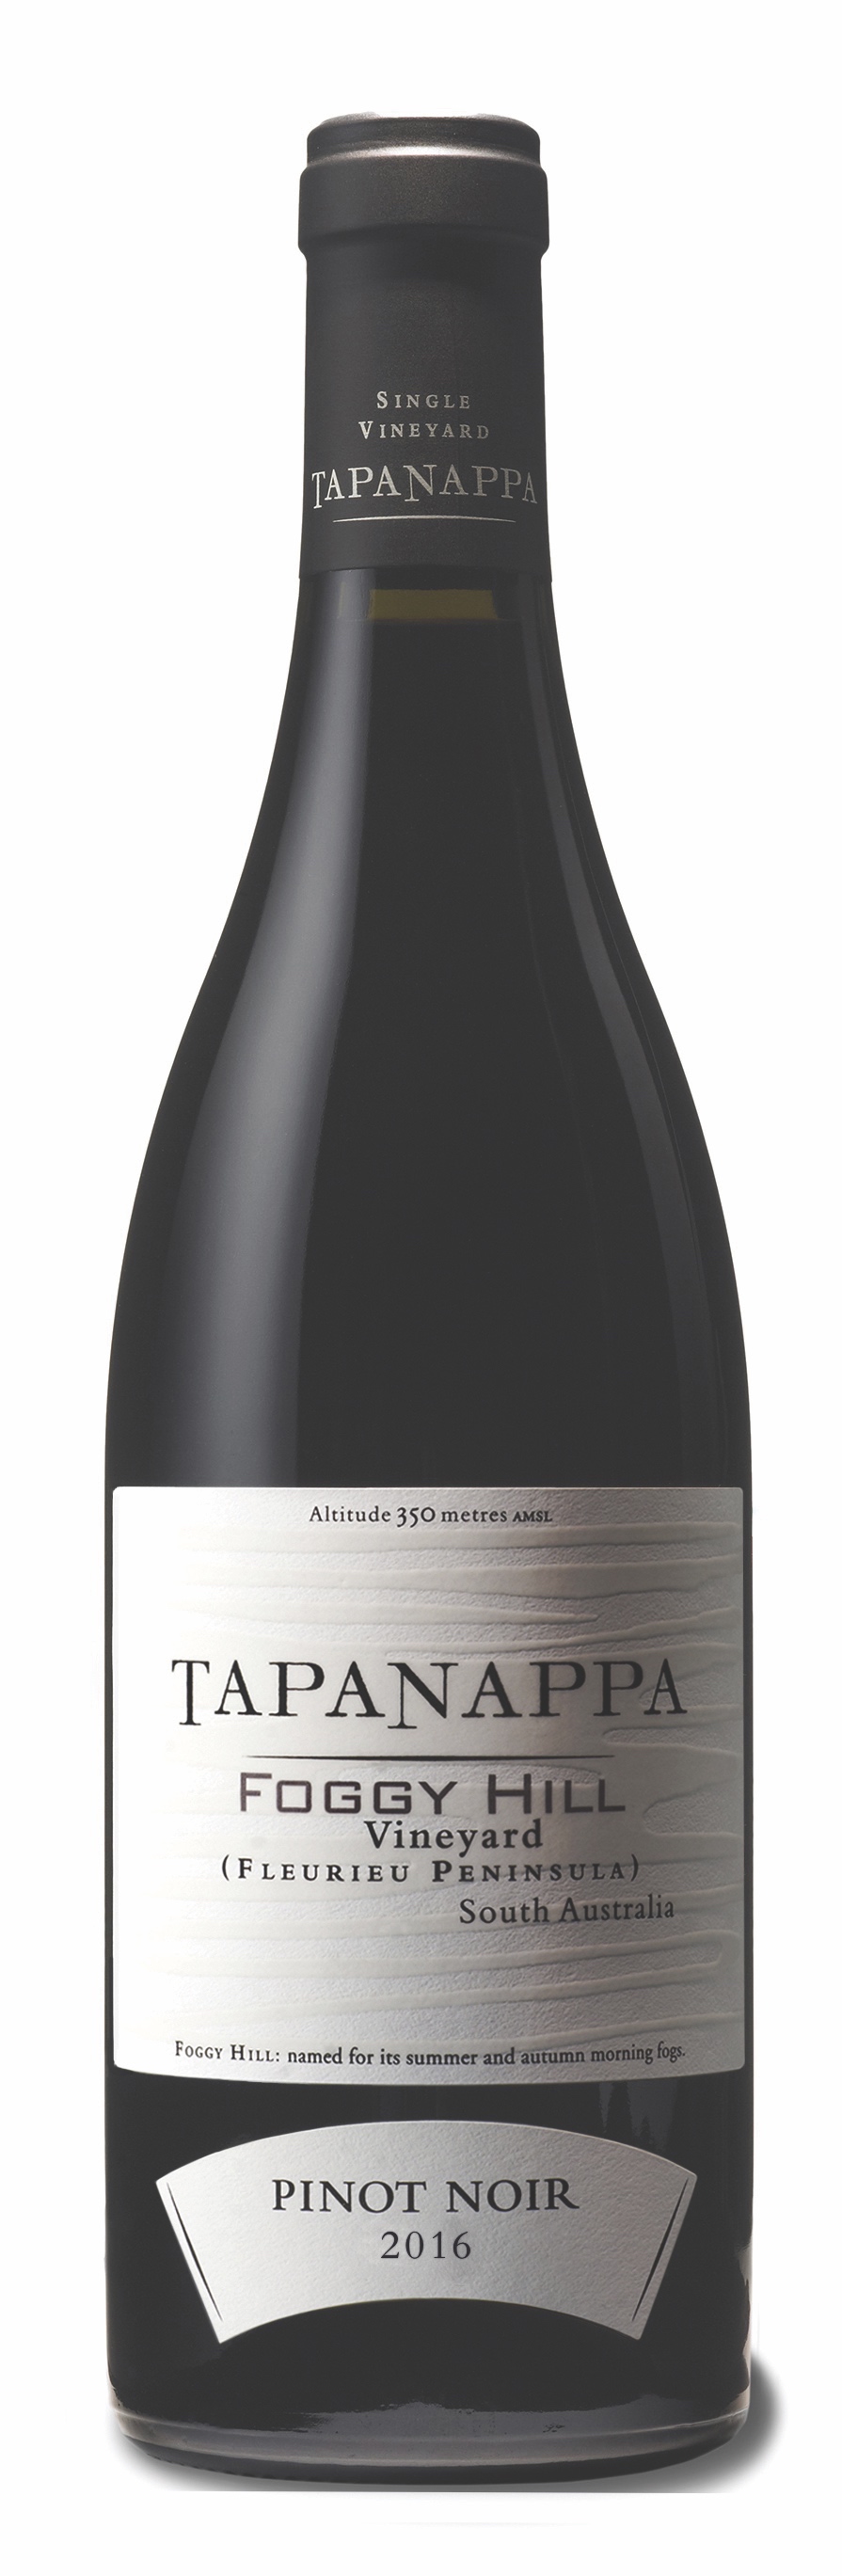 Tapanappa Foggy Hill Vineyard 2016 Pinot Noir bottle shot